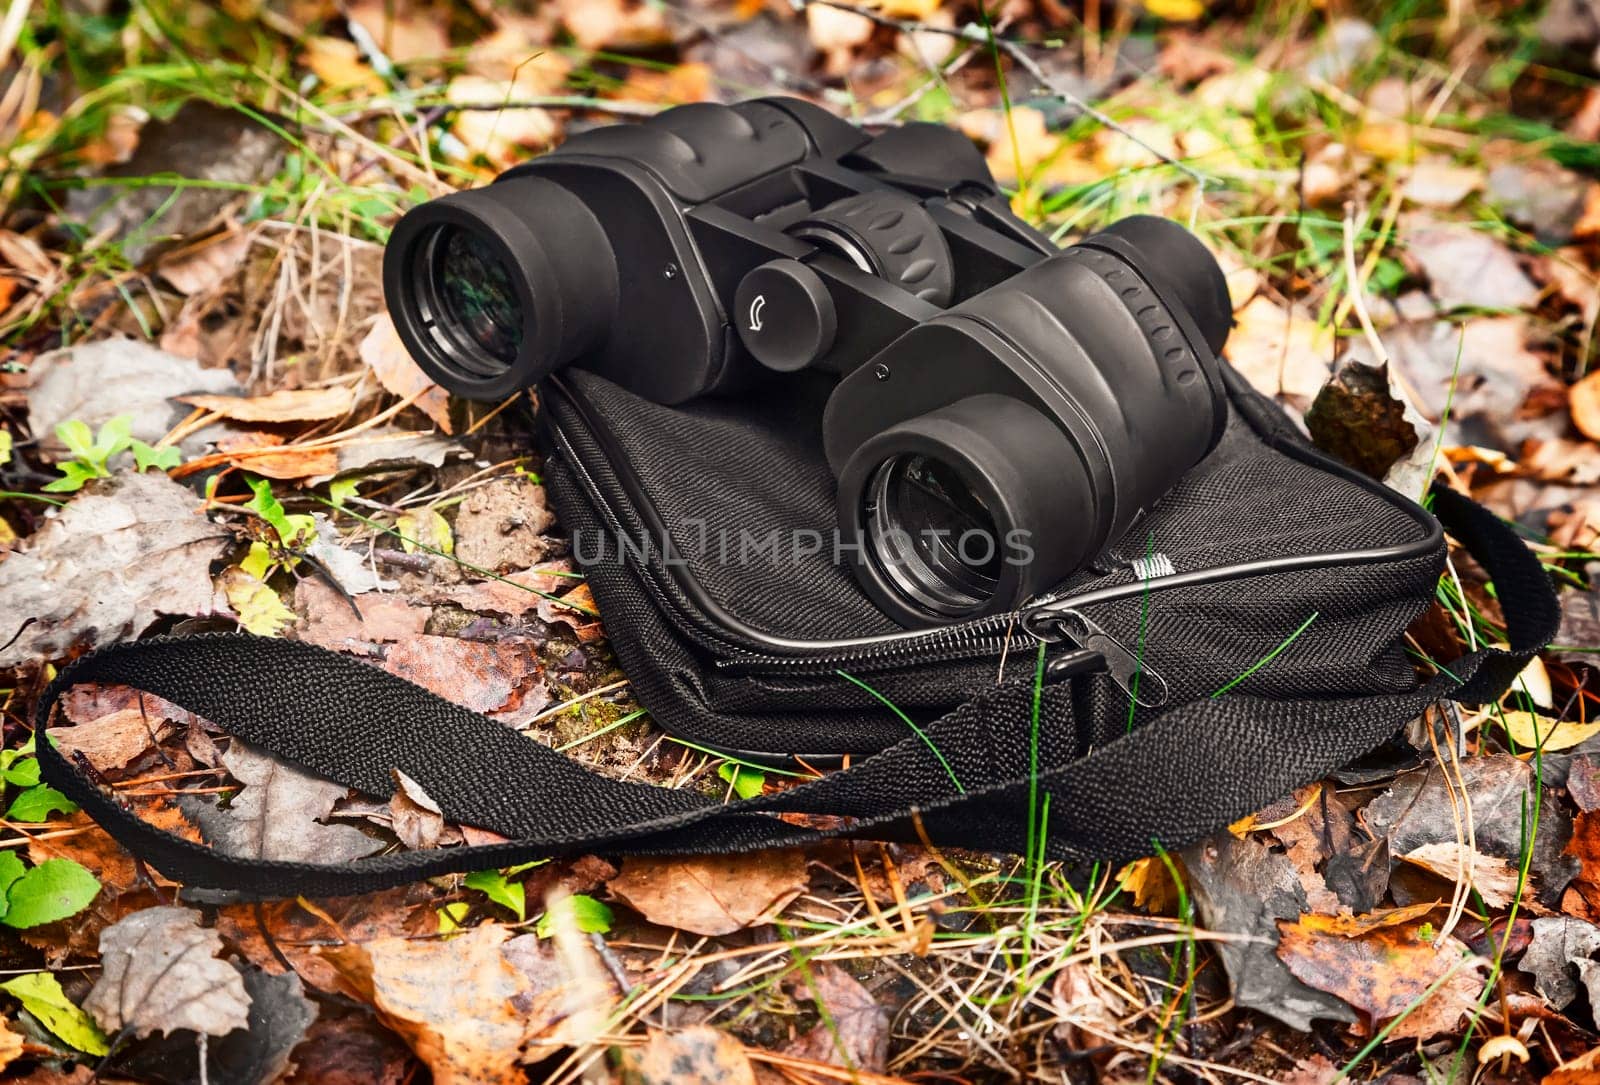 In woods on fallen leaves is a case for binoculars and binoculars.